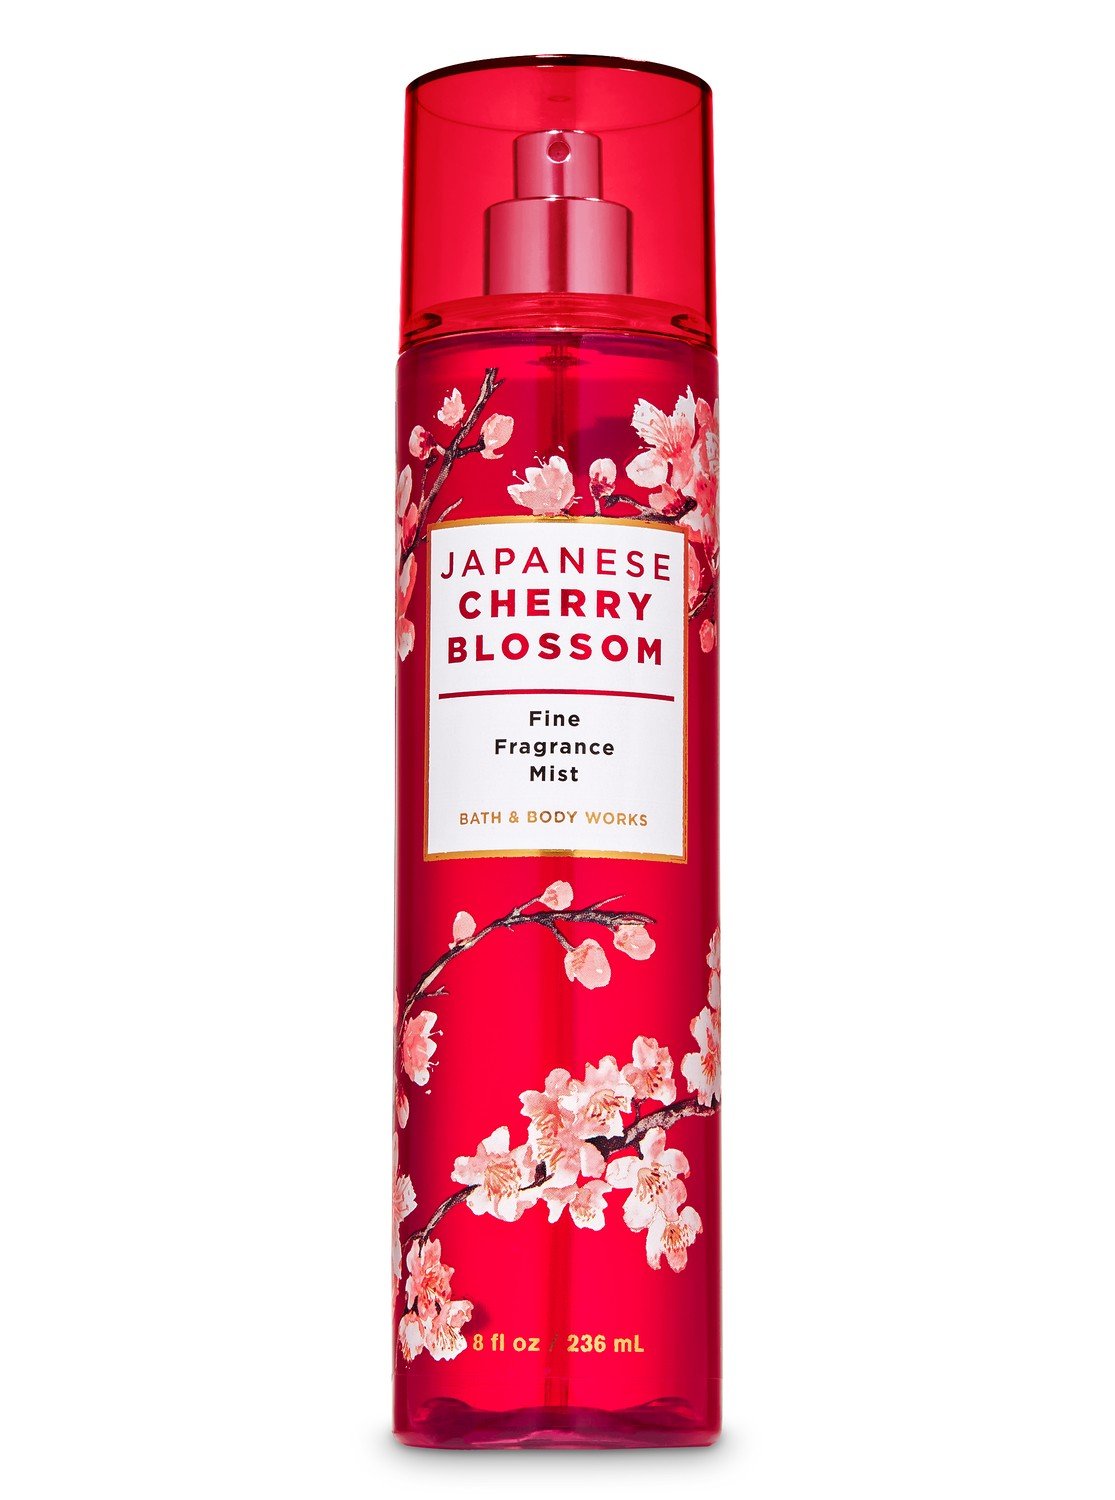 Japanese Cherry Blossom Body Spray And Mist Bath And Body Works Australia